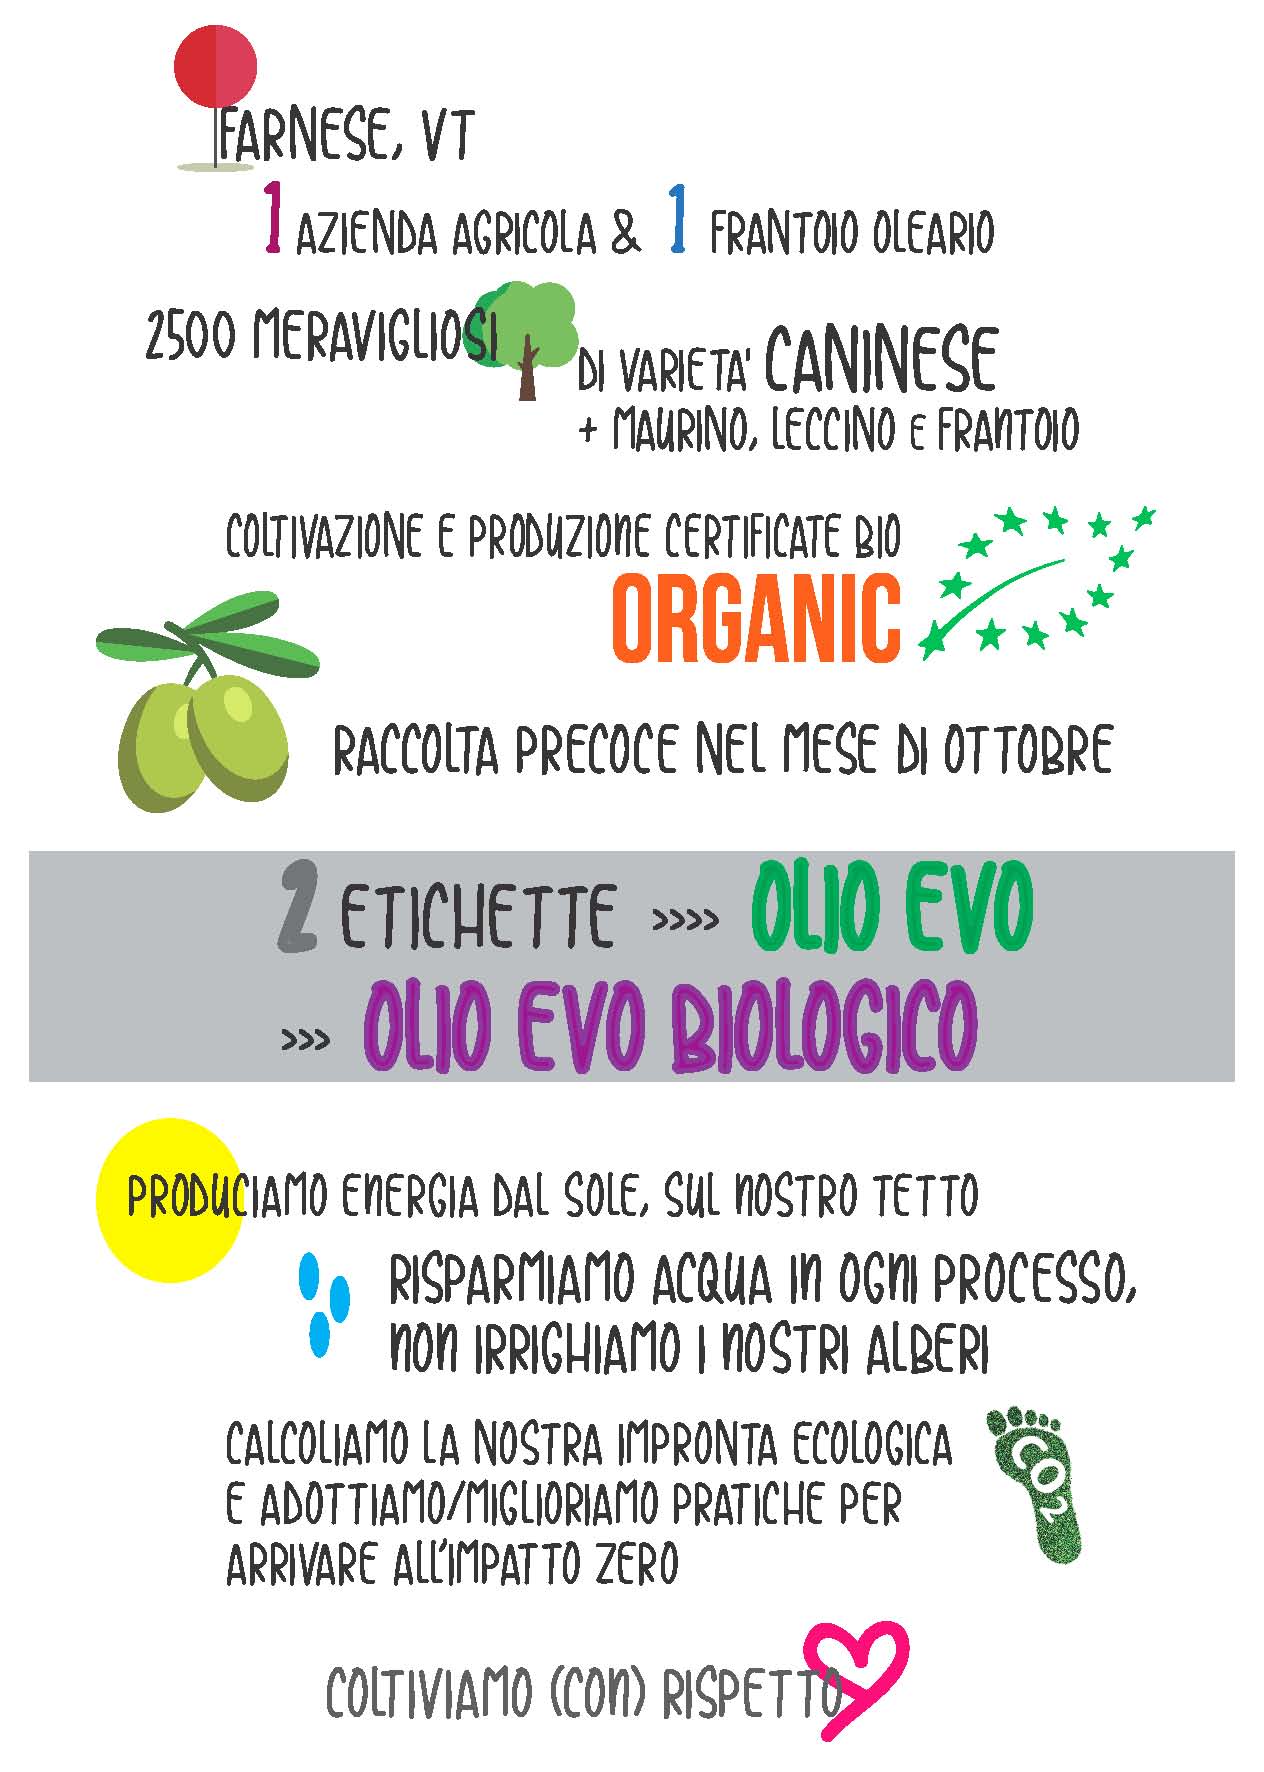 PouchBag 1,5 l extra virgin olive oil ° NOVELLO ° PRODUCTION 2021